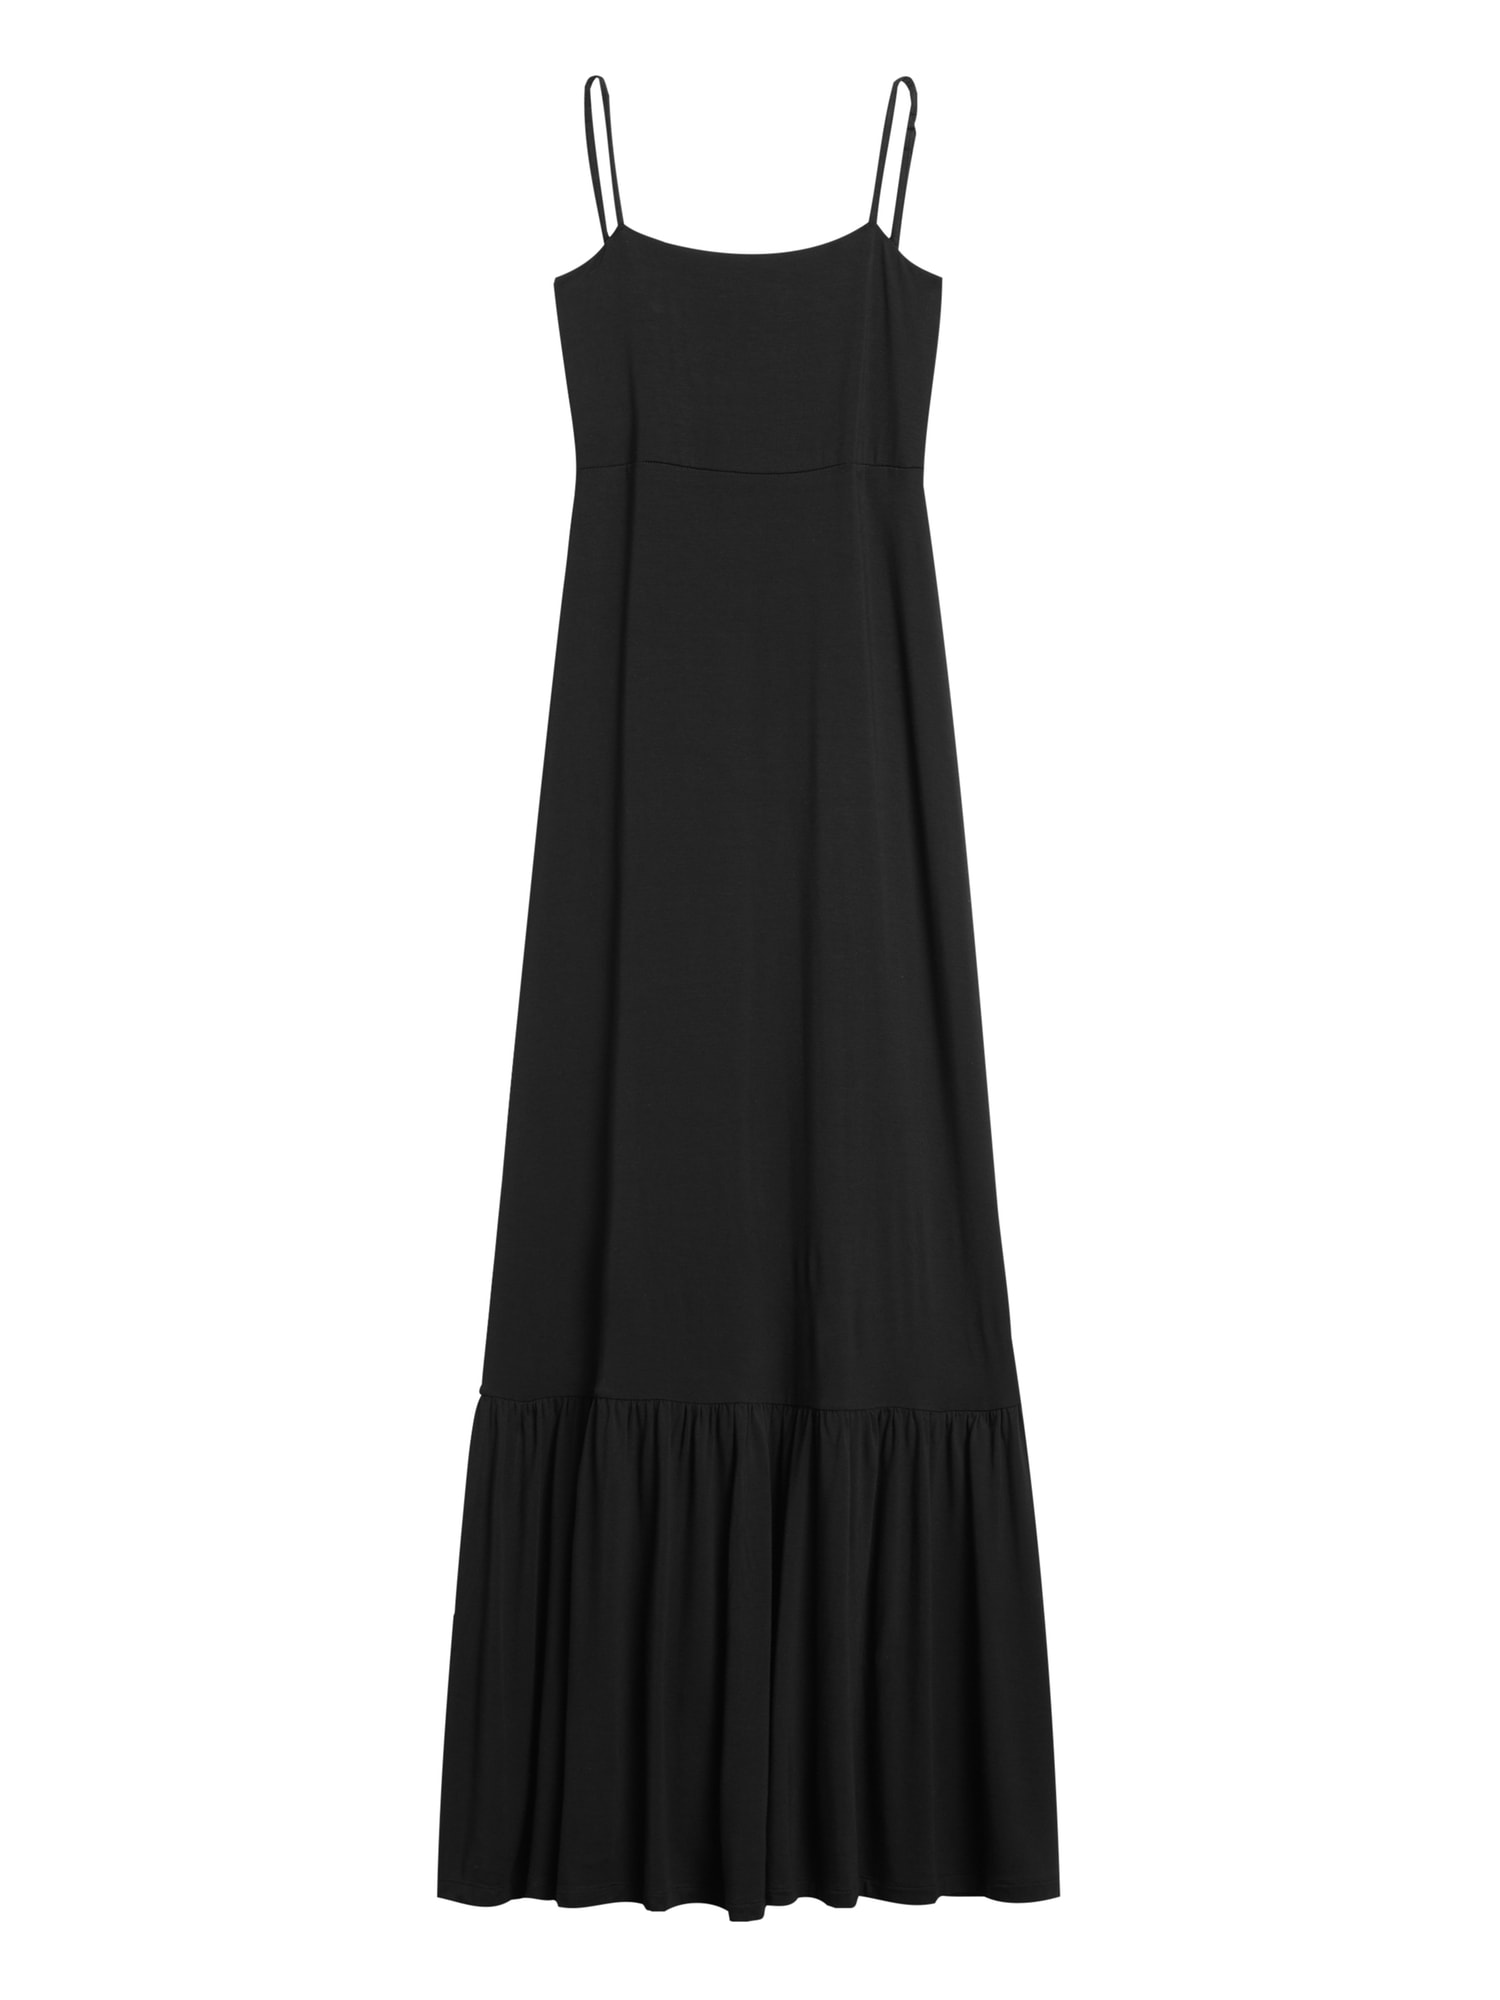 black and white petite maxi dress